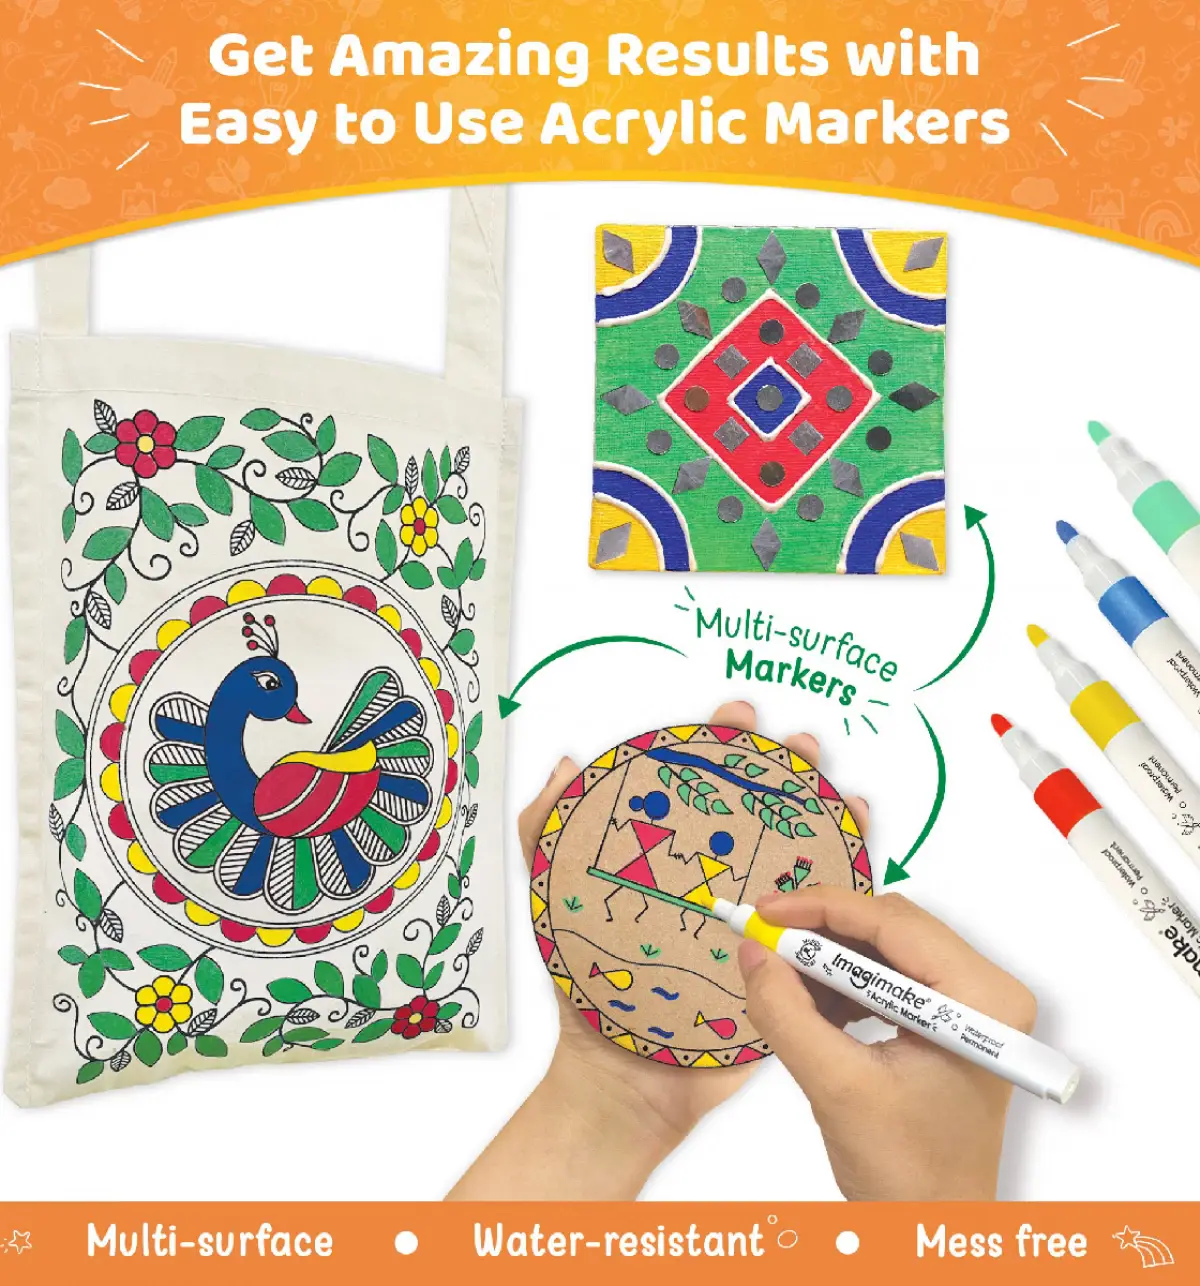 Imagimake Learn Indian Art Forms-Arts and Craft DIY Kit For Kids Learn Creative Crafts, Indian Art Forms-Madhubani, Warli, Lippan, Mandala & Block Printing Arts, Kids for 8Y+, Multicolour